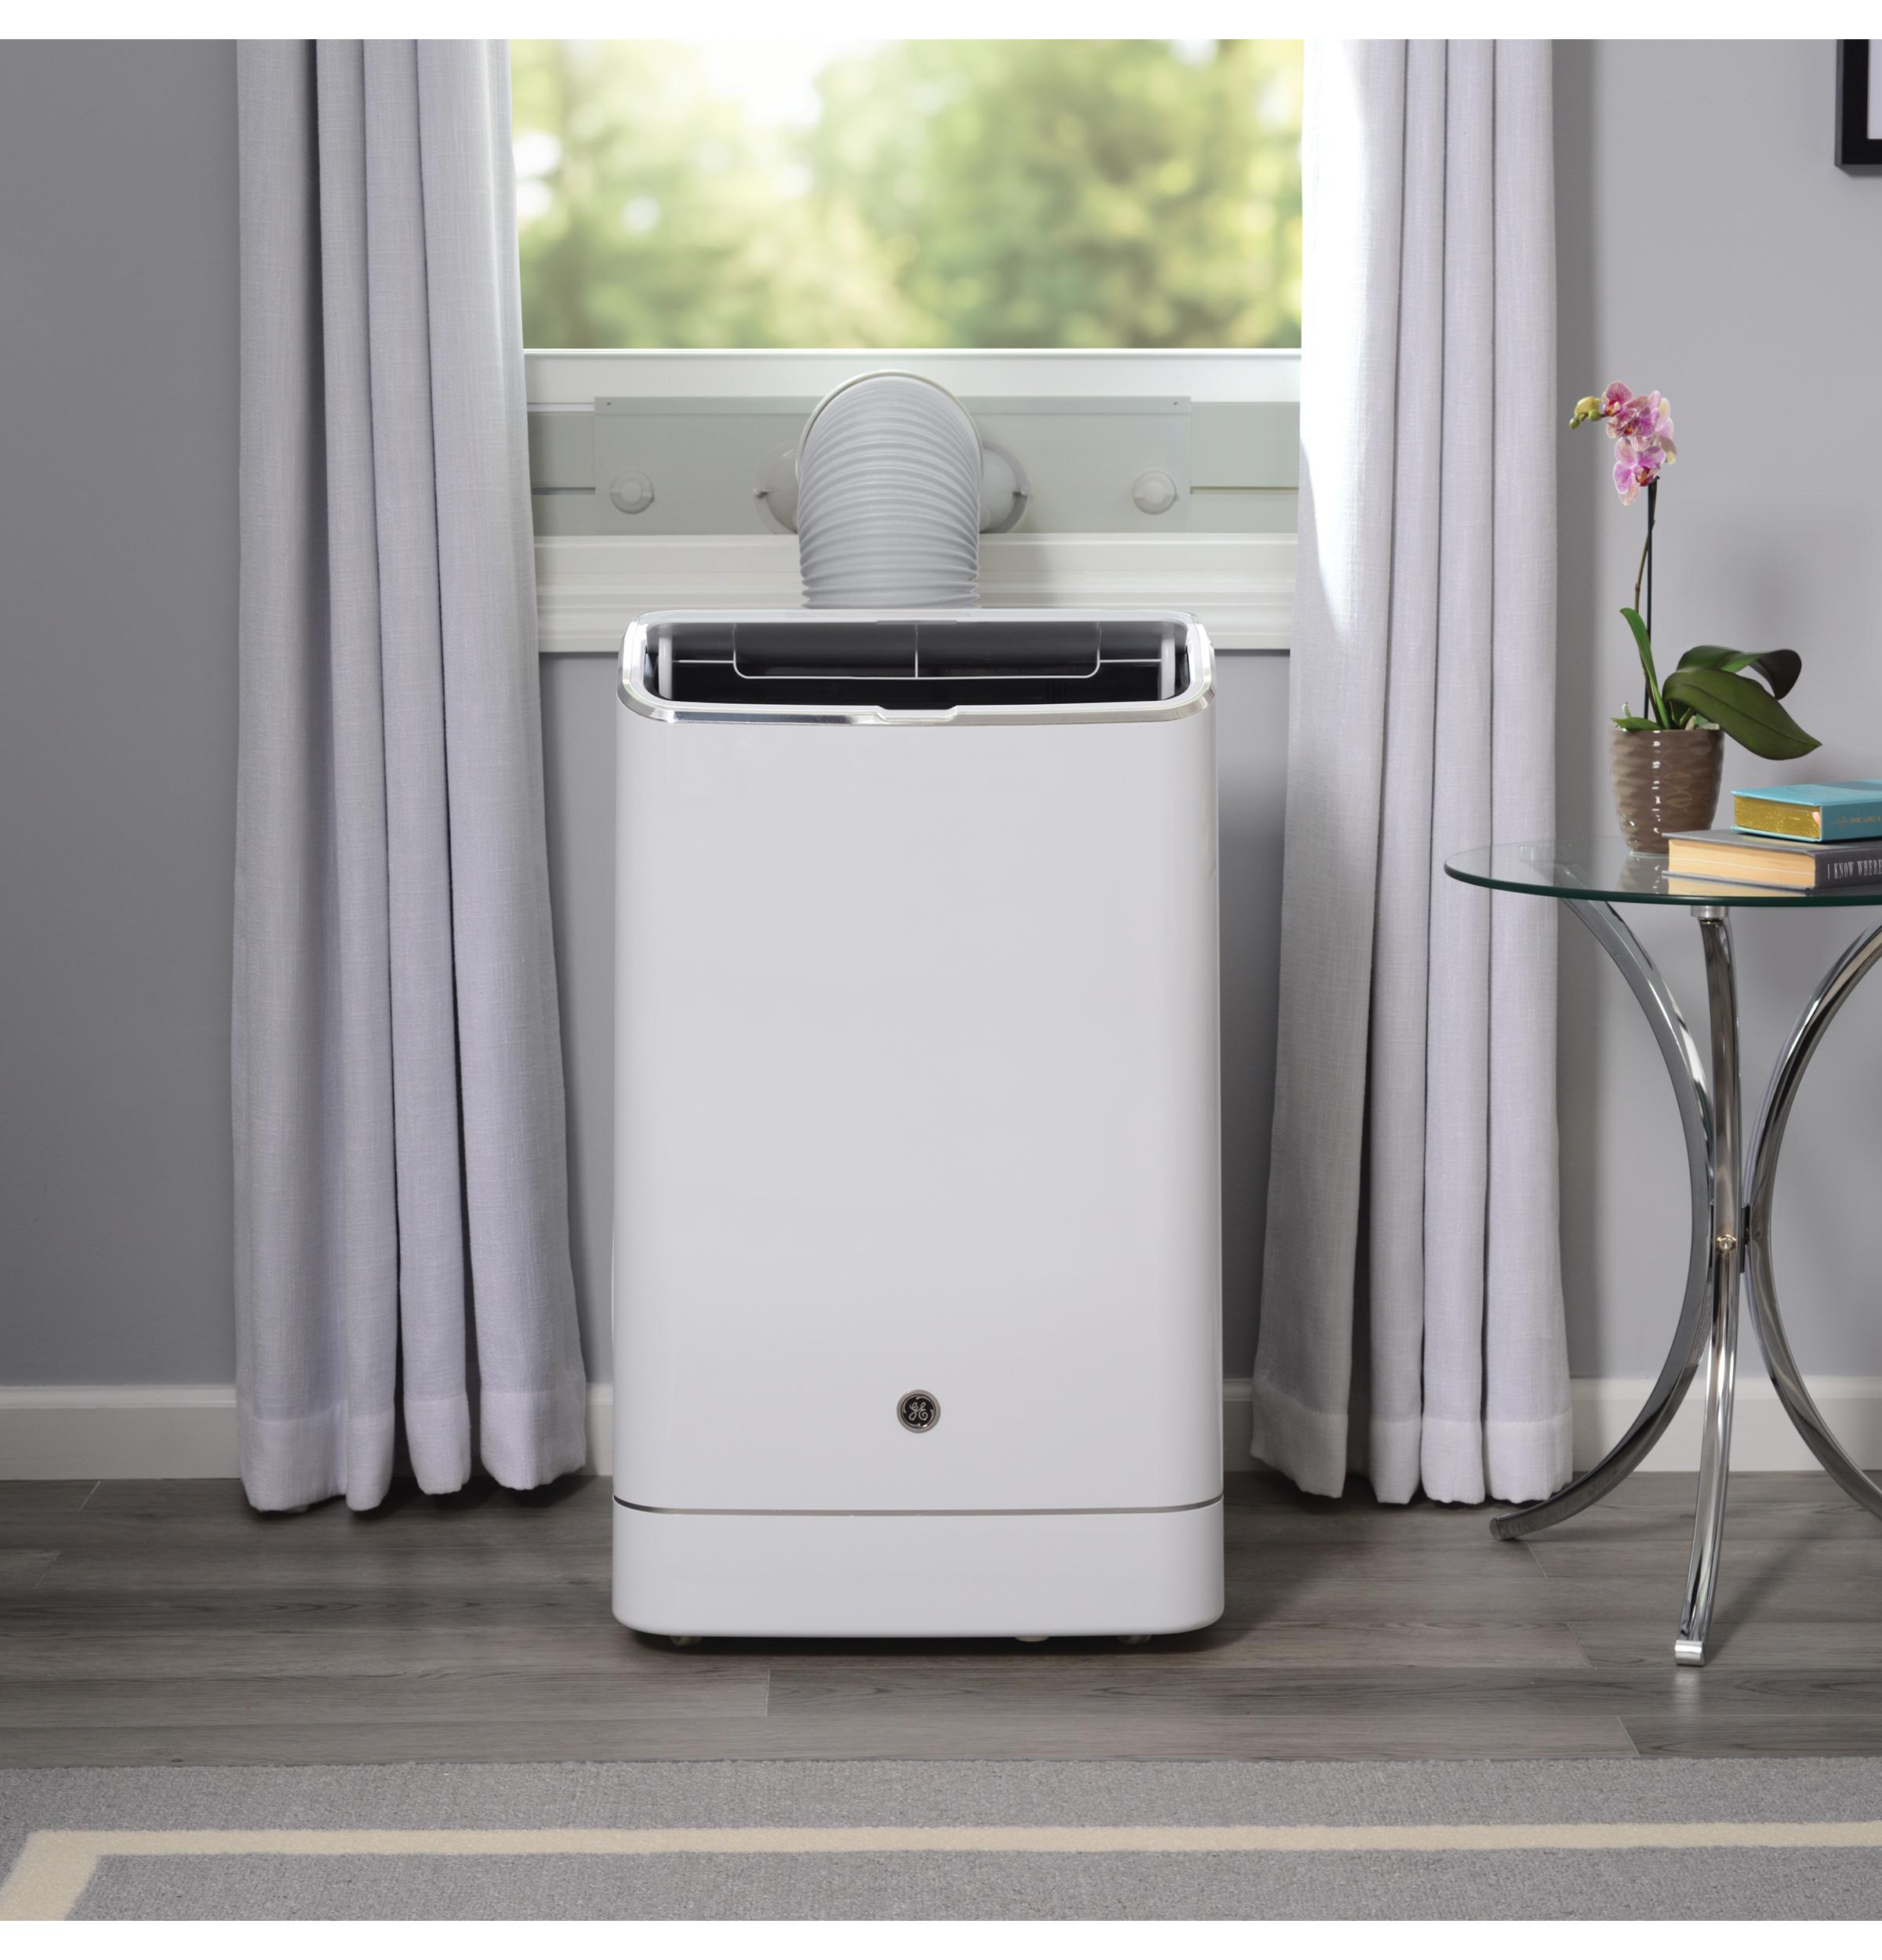 Ge Appliances APSA13YBMW Ge® 14,000 Btu Heat/Cool Portable Air Conditioner For Medium Rooms Up To 550 Sq Ft. (9,950 Btu Sacc)